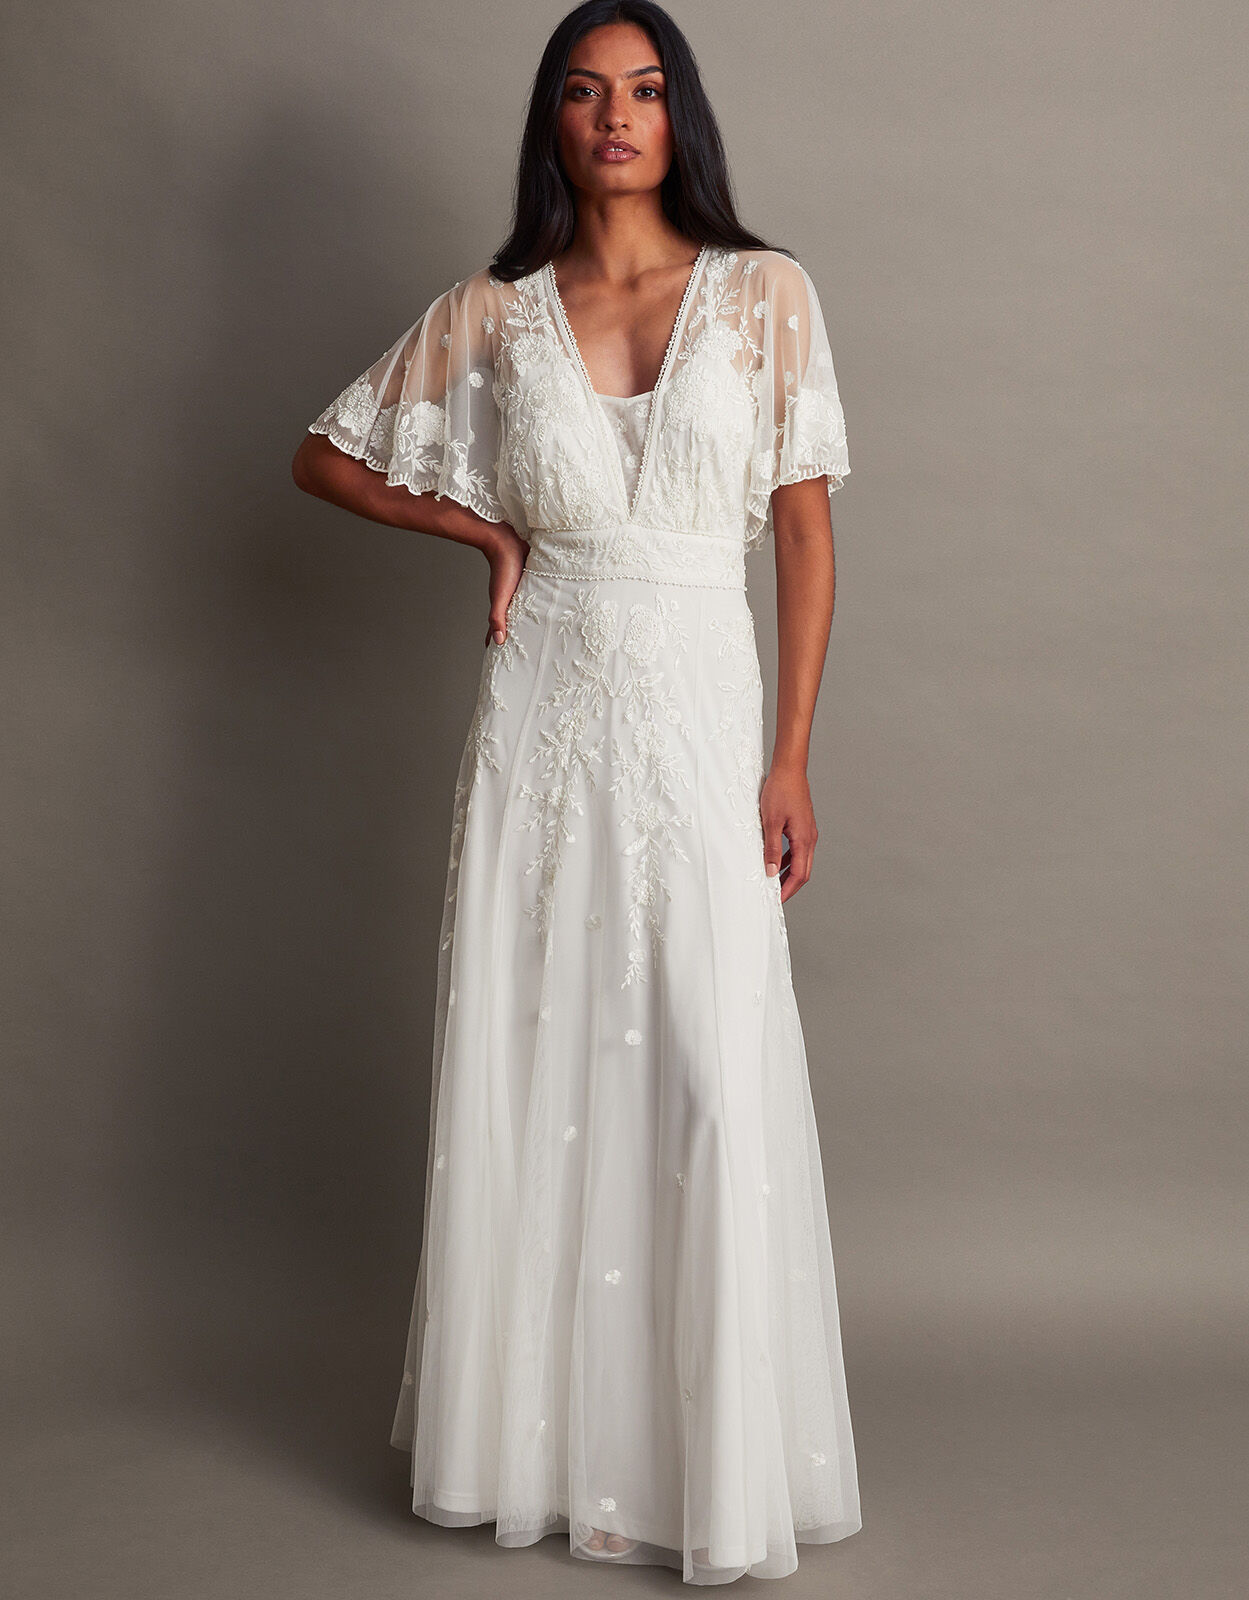 Plus Size Wedding Dresses: Best Bridal Gowns For Curvy Brides